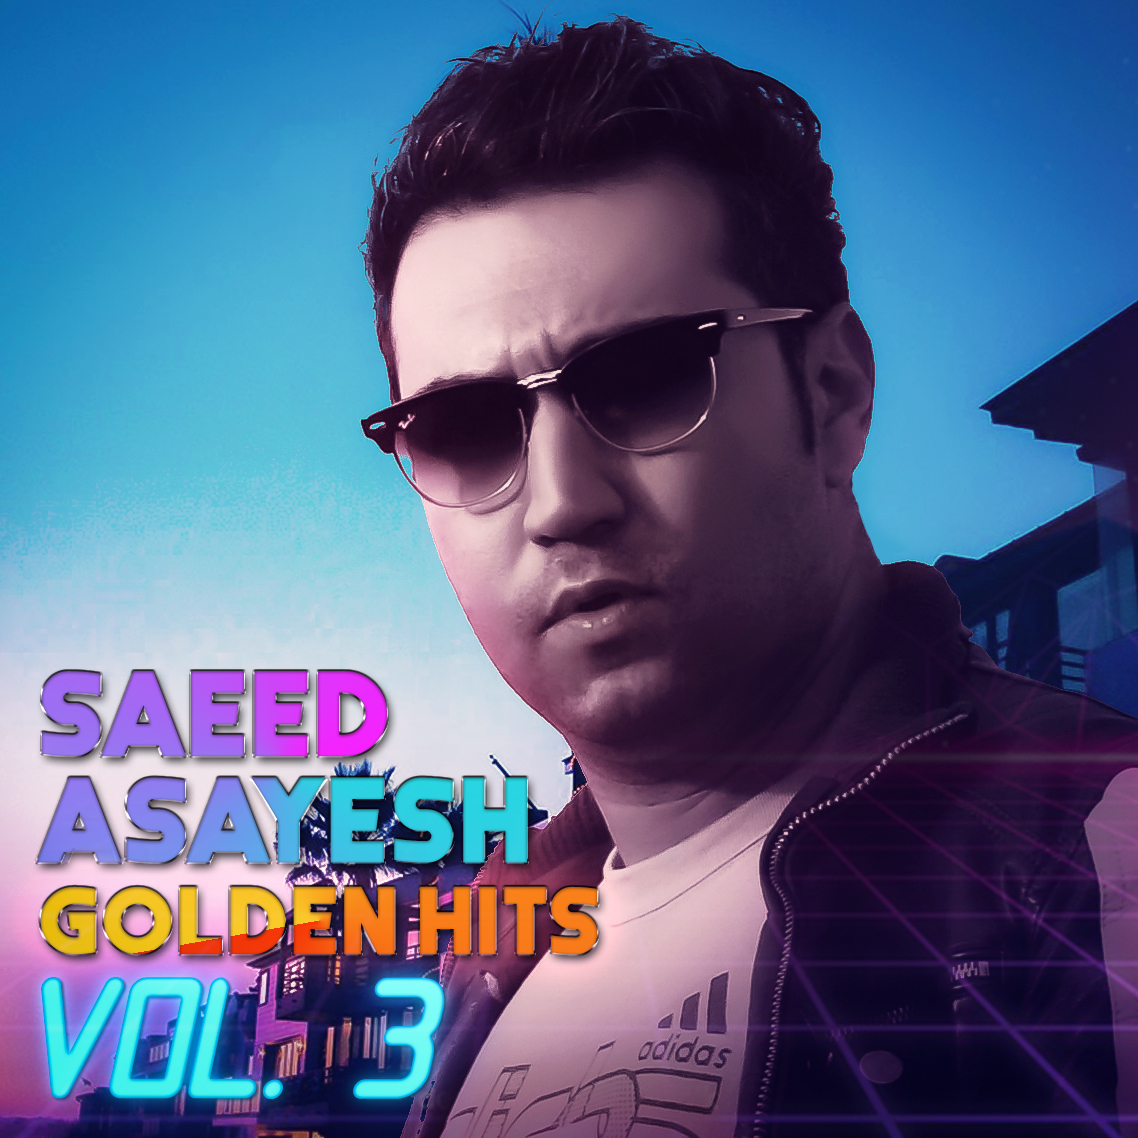  دانلود آهنگ جدید سعید آسایش - خیابون | Download New Music By Saeed Asayesh - Khiaboon